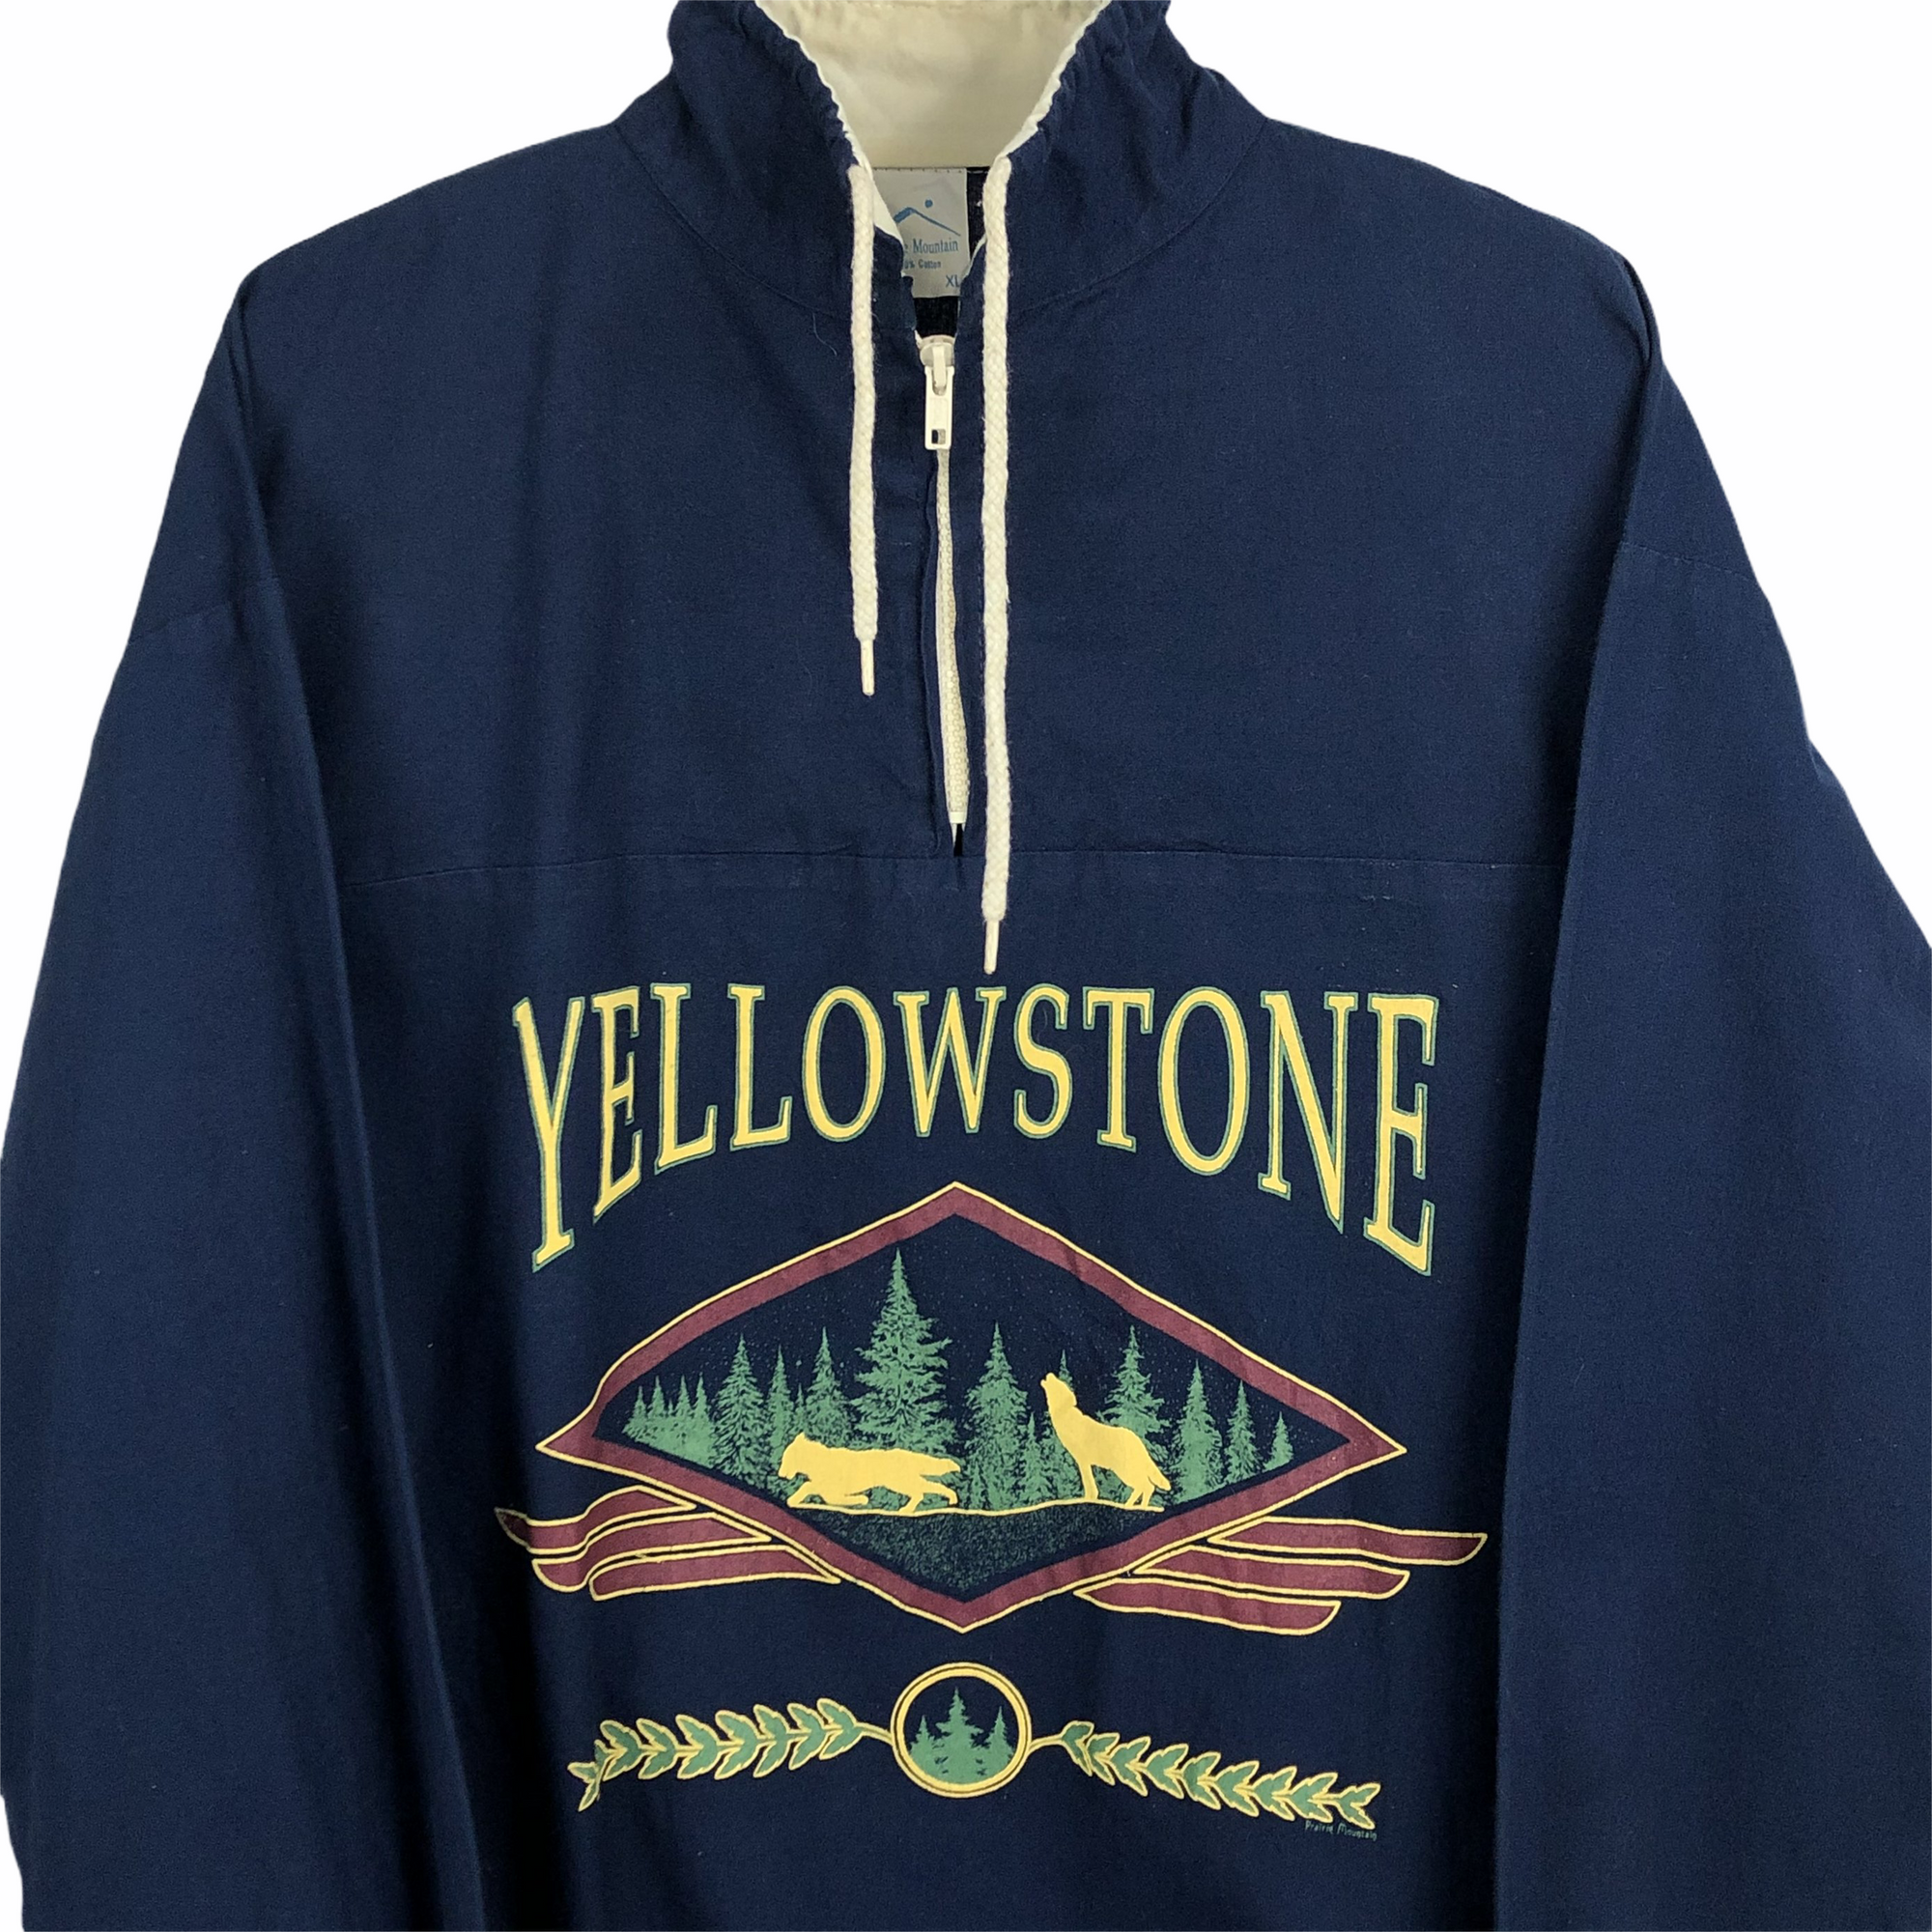 Vintage 'Yellowstone' 1/4 Zip Jacket - Men's Medium/Women's Large